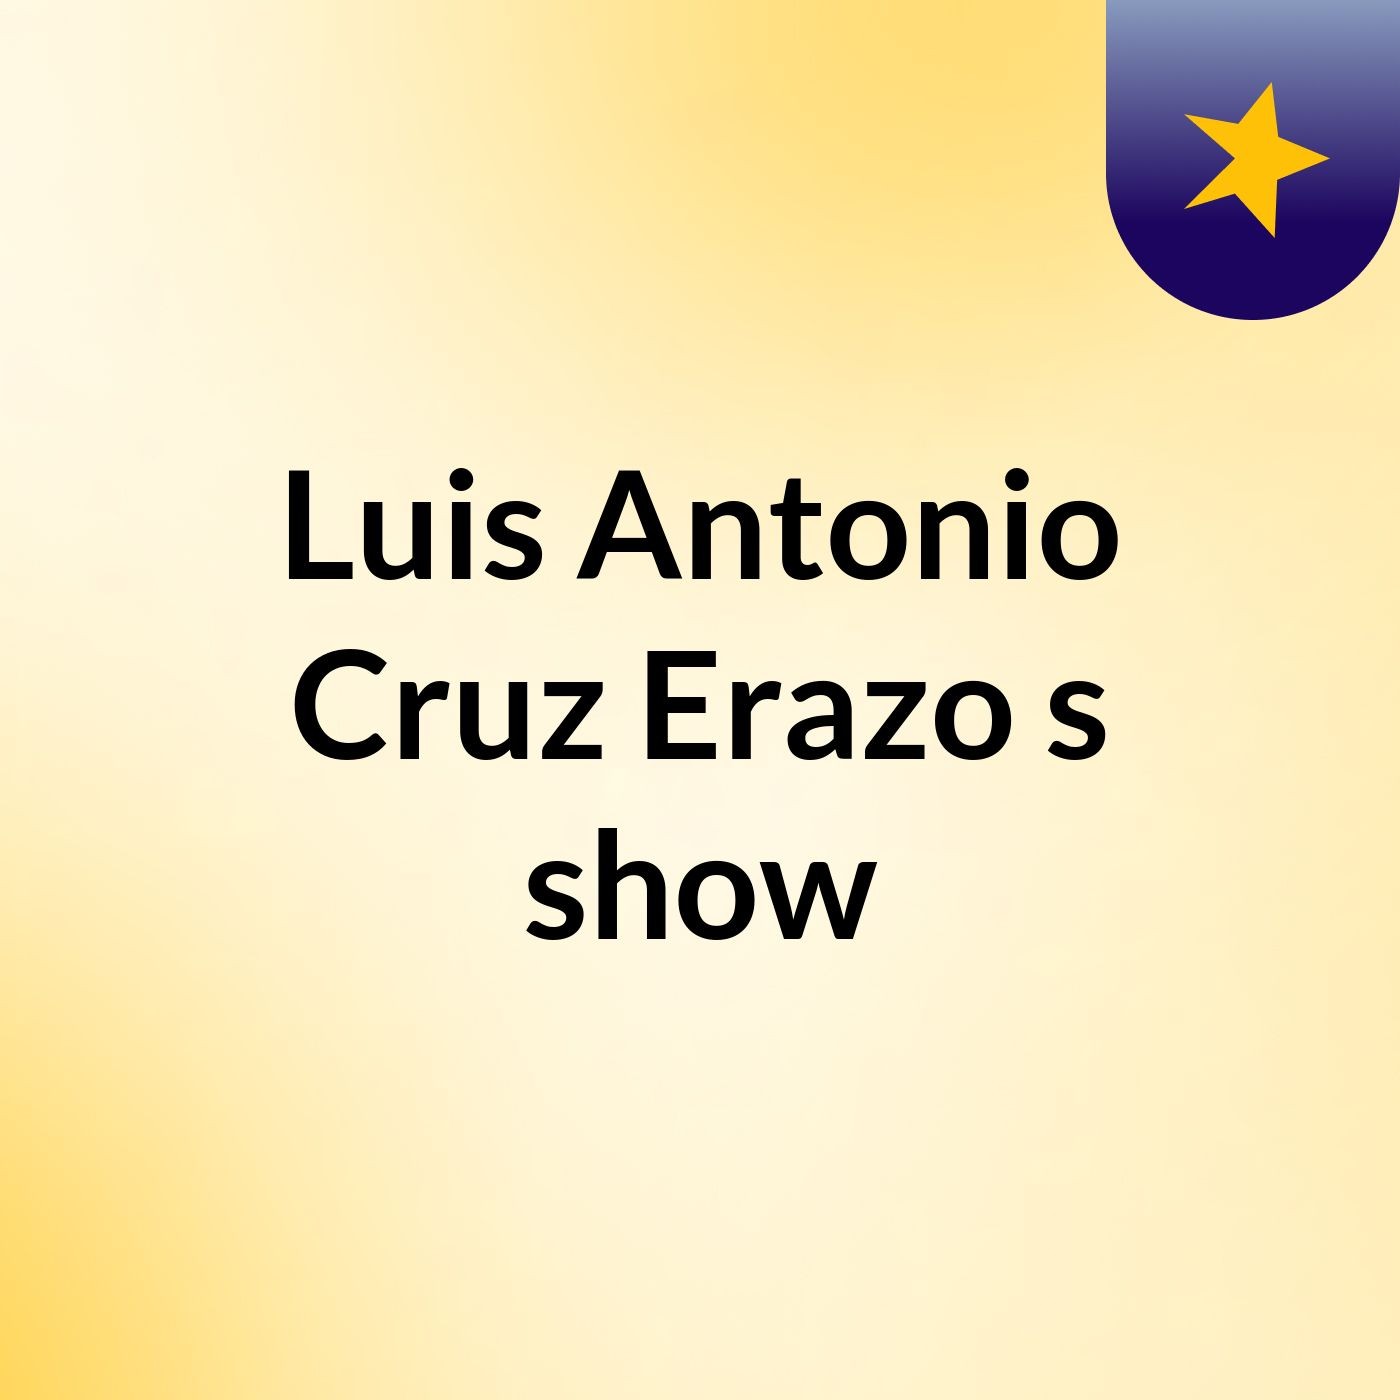 Luis Antonio Cruz Erazo's show